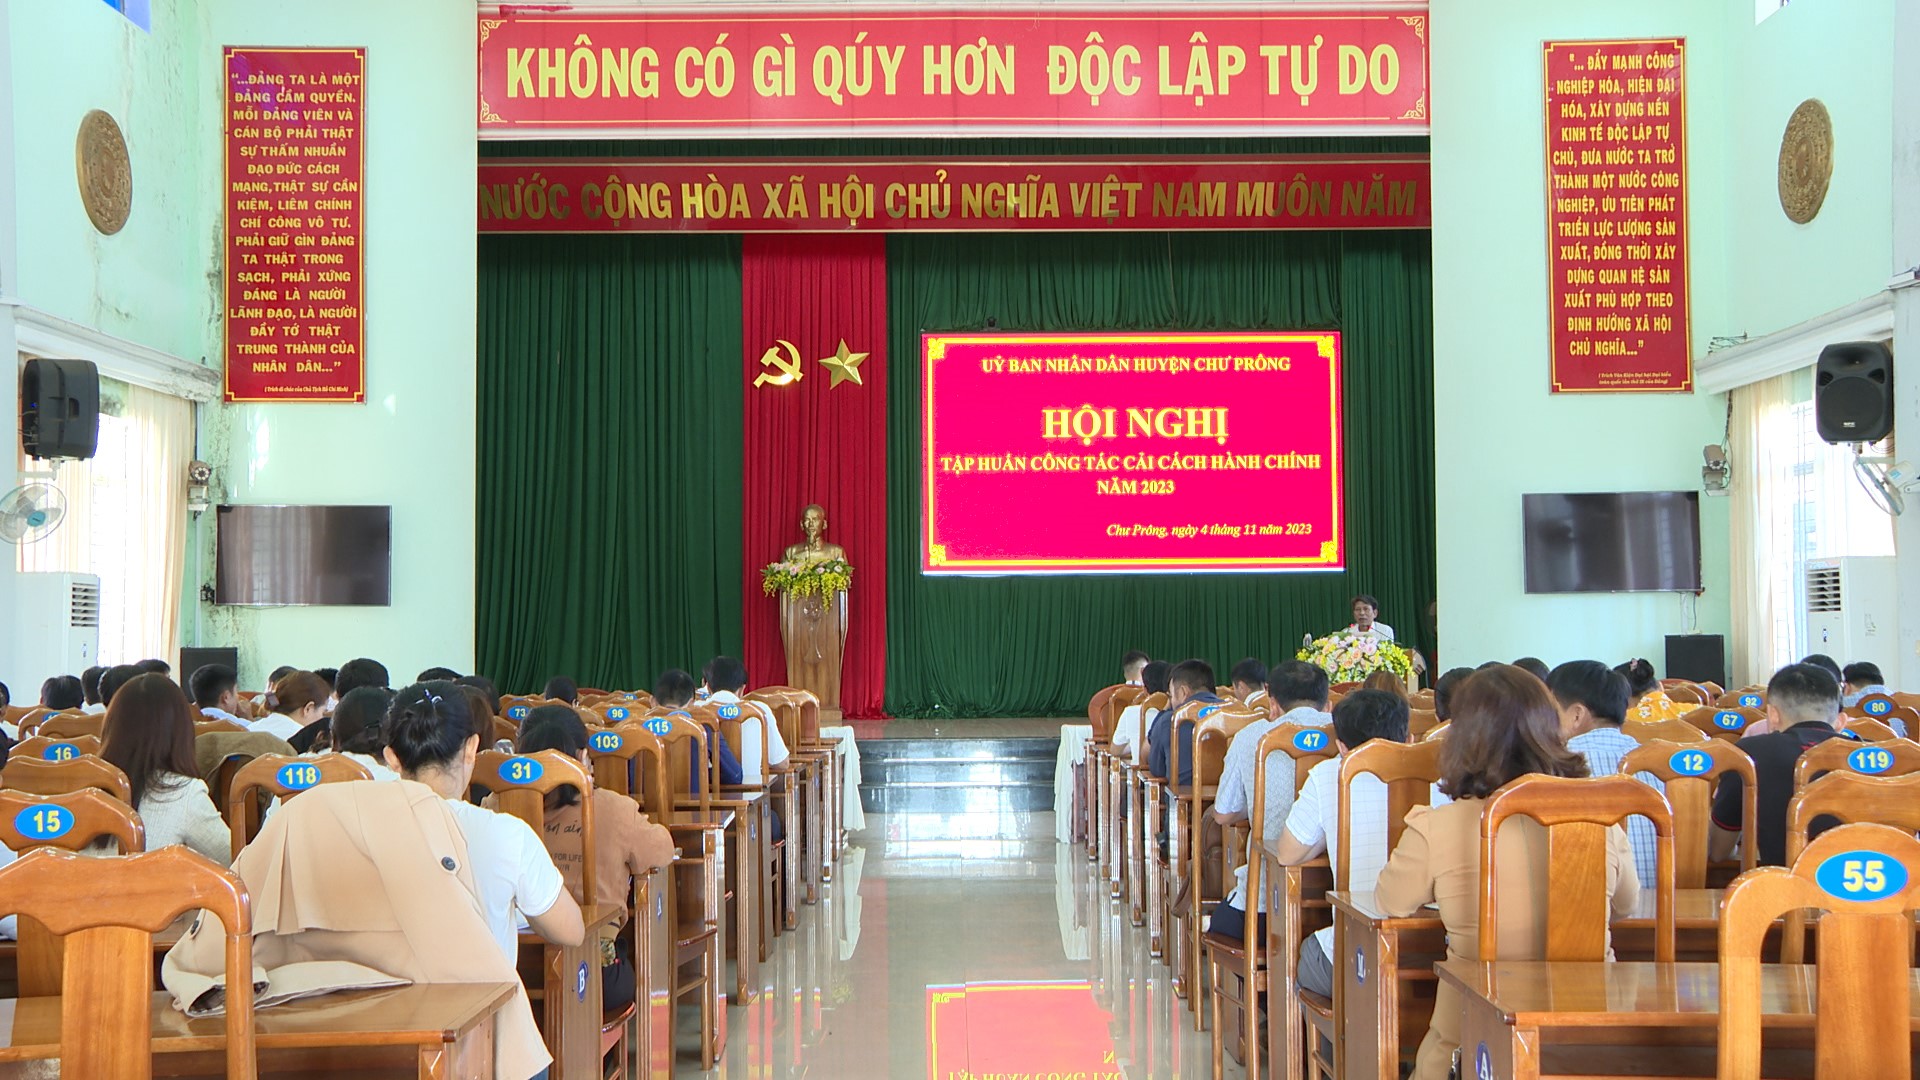 Quang-canh-hoi-nghi-tap-huan-cong-tac-cai-cach-hanh-chinh-nam-2023.jpg